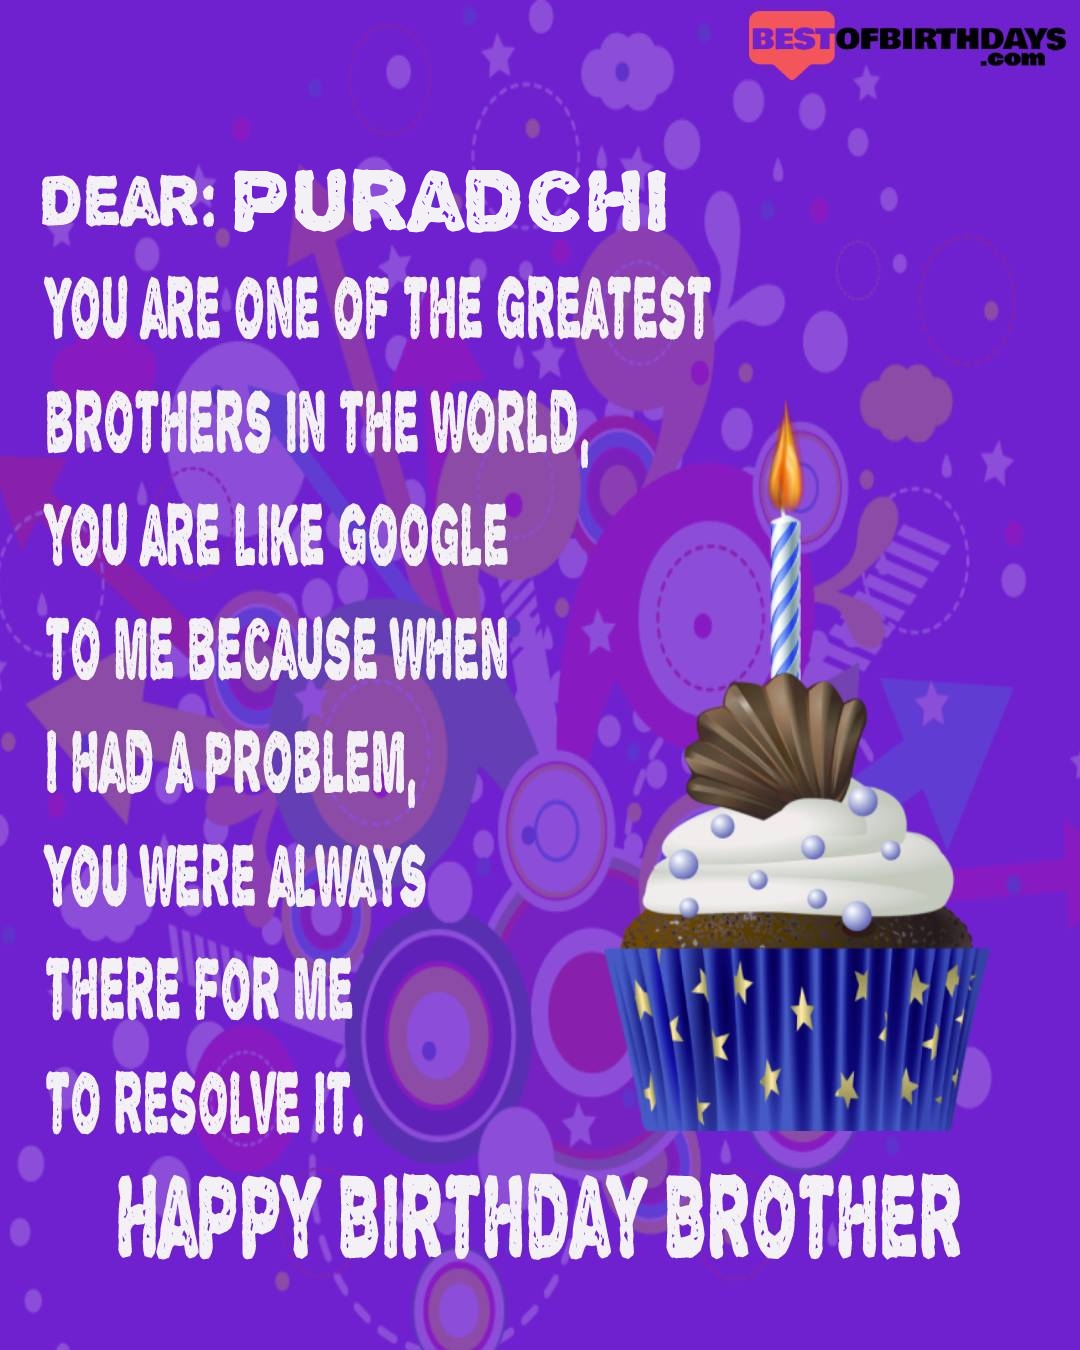 Happy birthday puradchi bhai brother bro